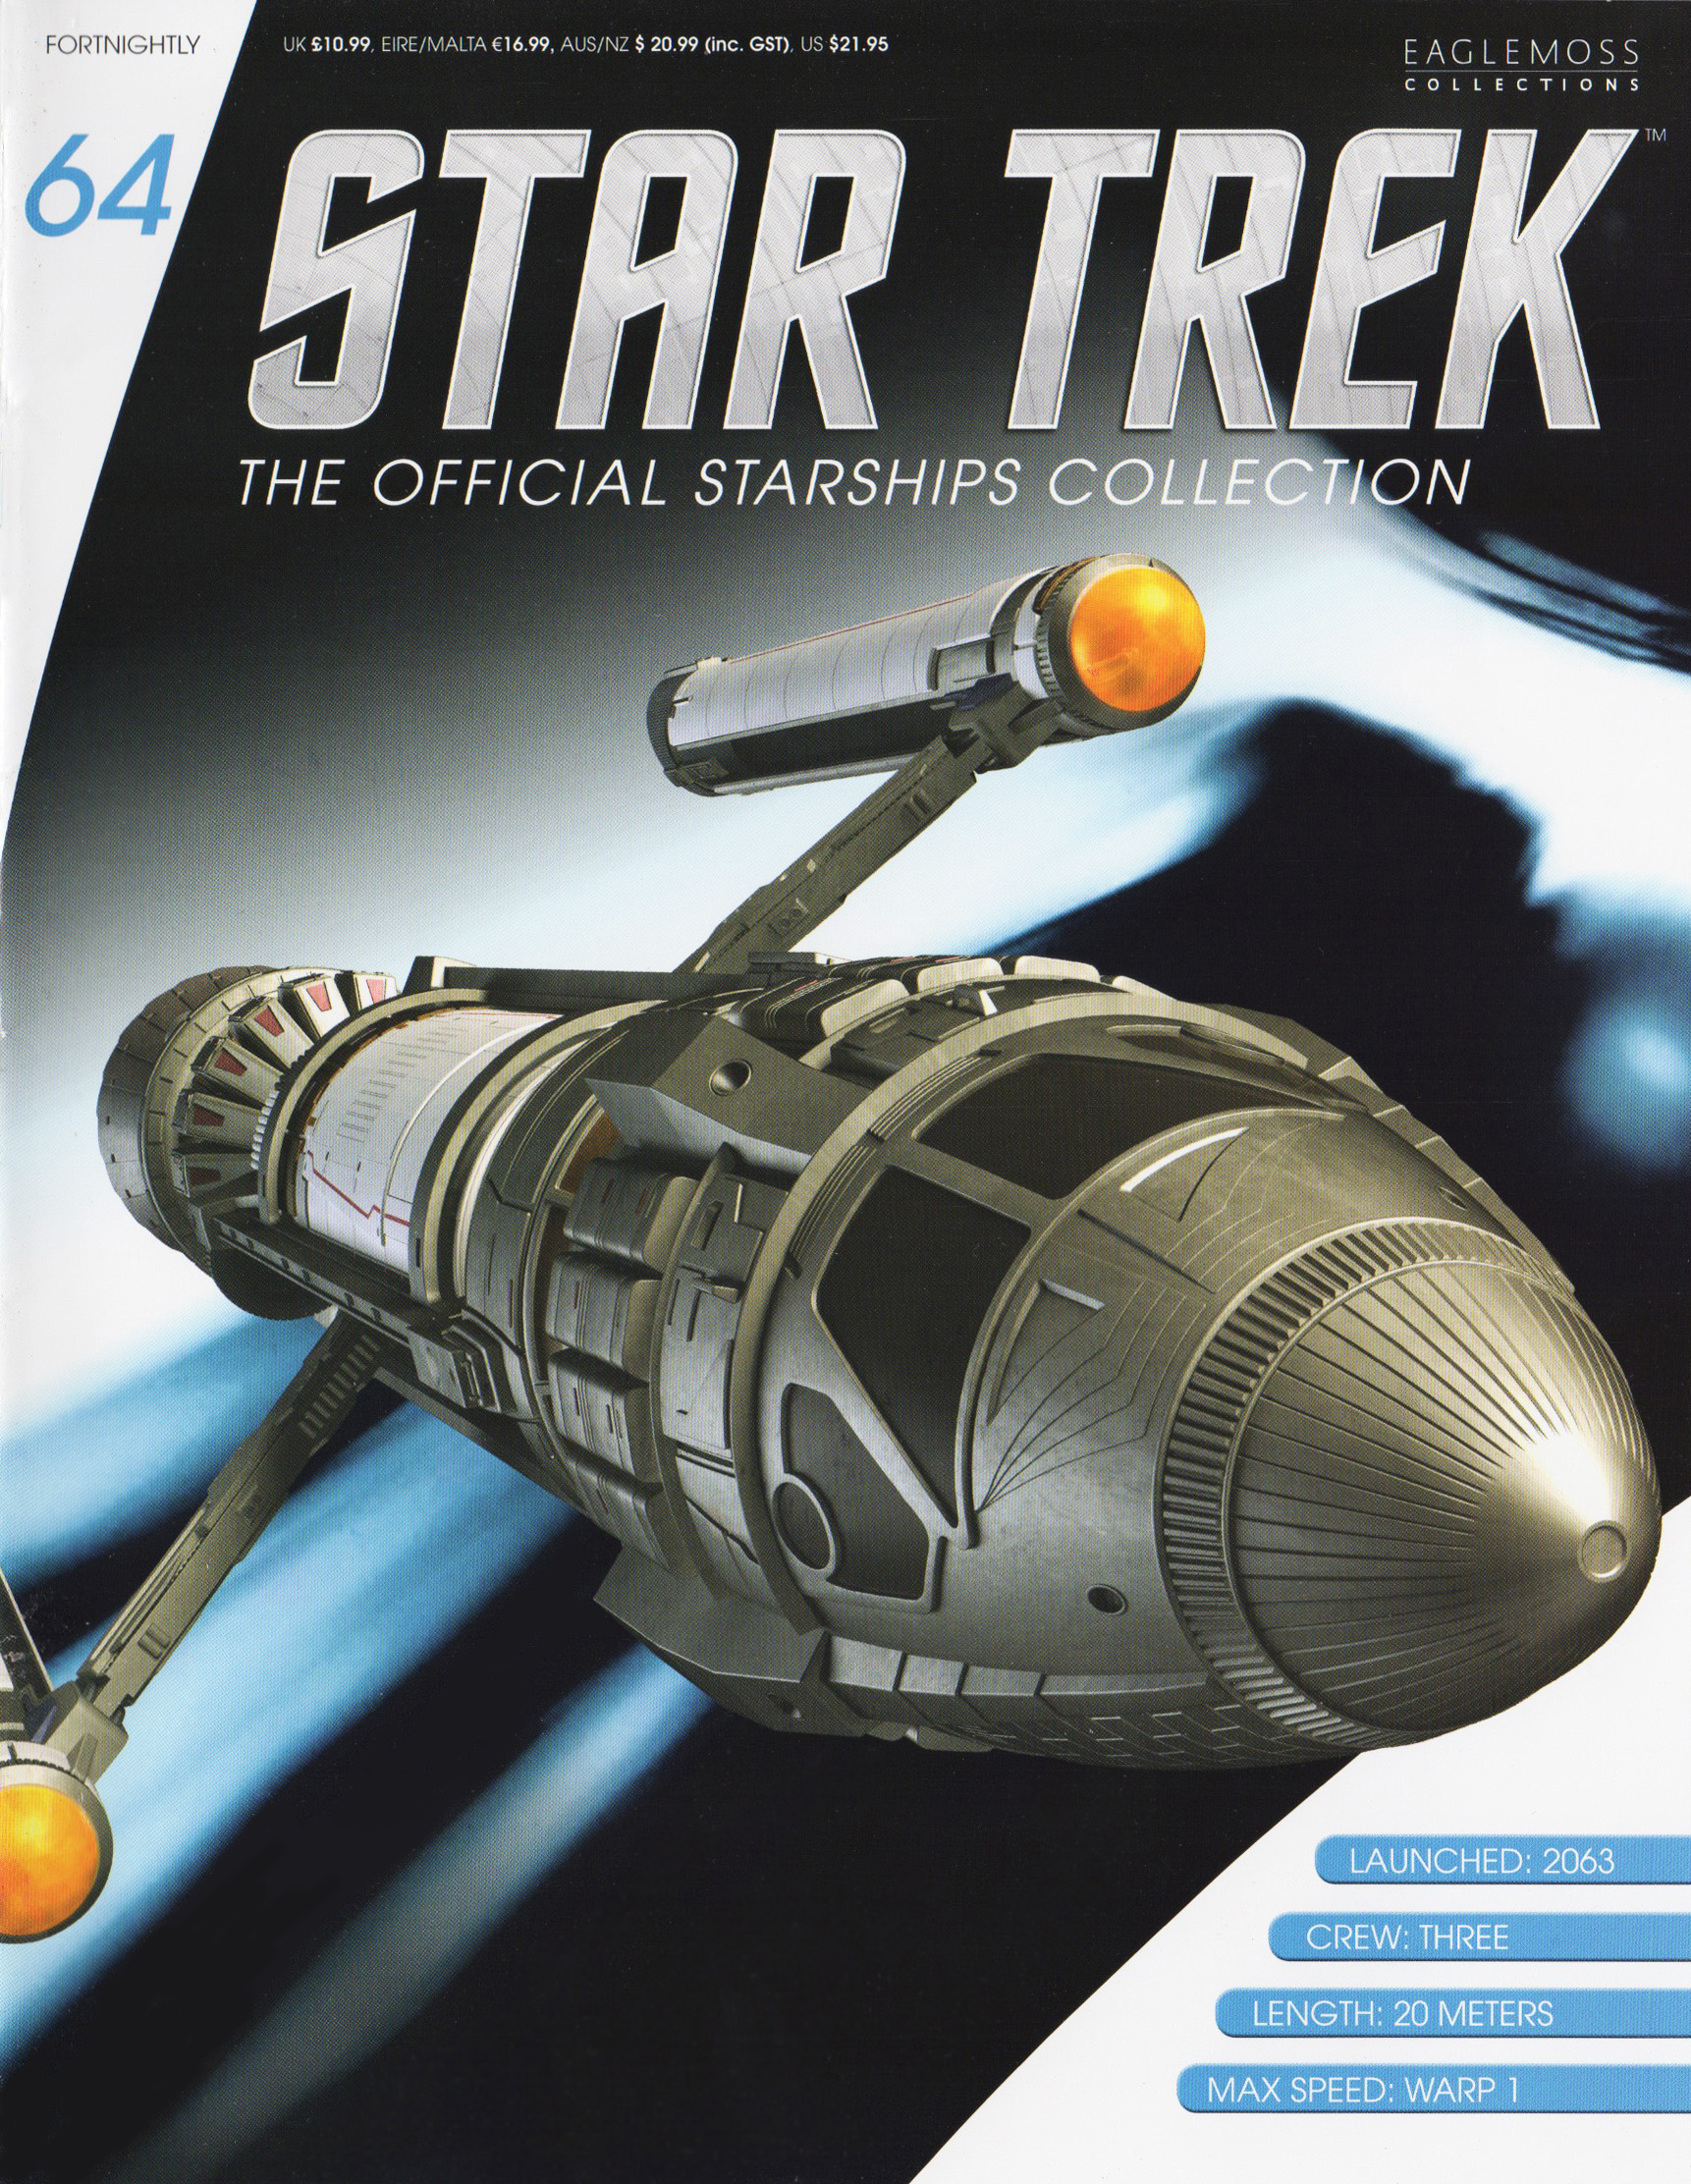 Xindi Aquatic Cruiser Eaglemoss Star Trek Issue 65 Diecast Model & Magazine 